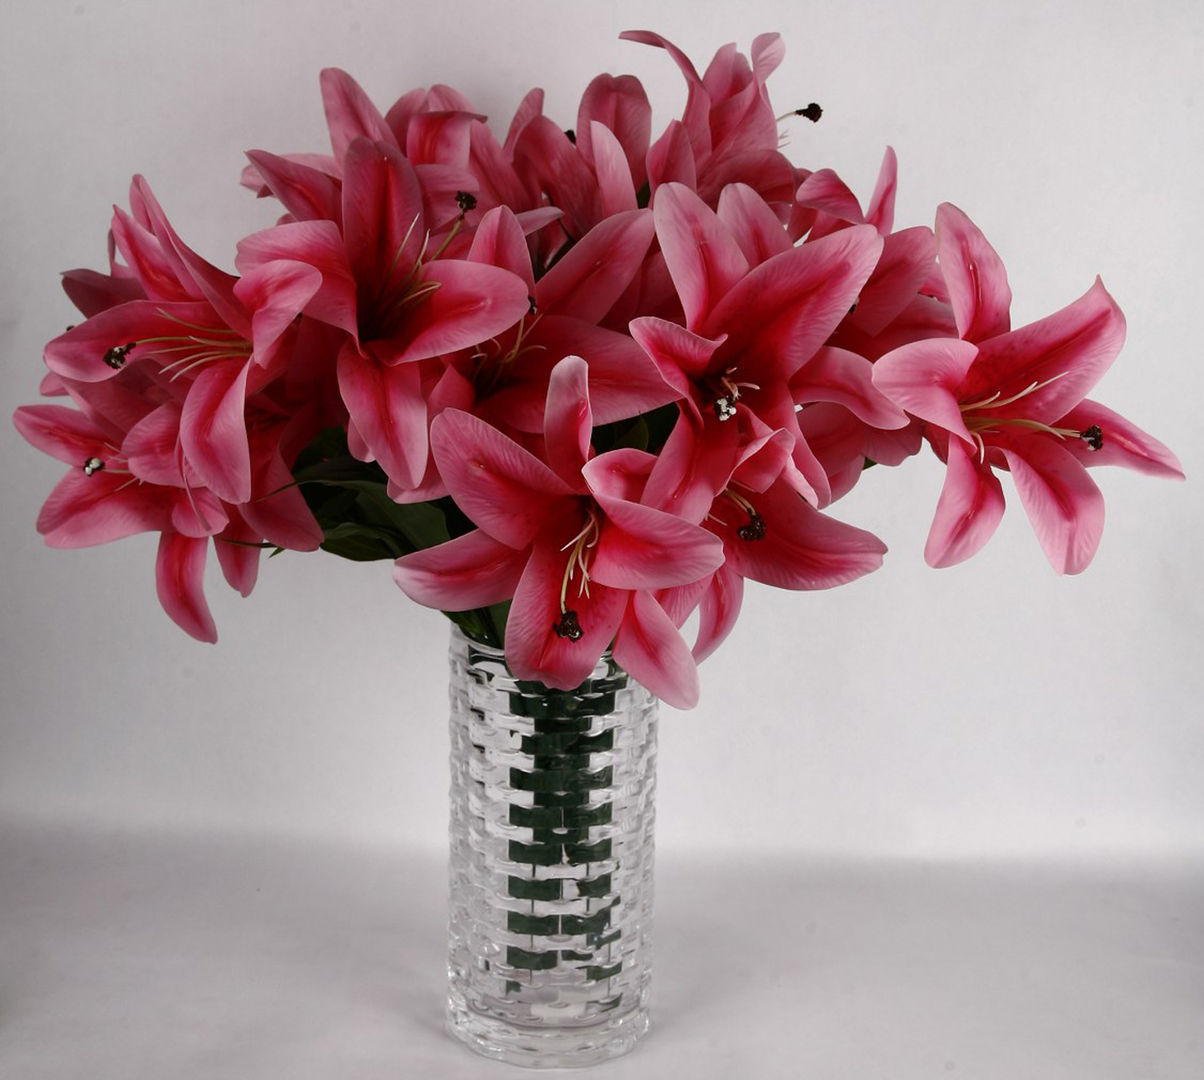 Flowers - Orchids and Lily, Uberlyfe Uberlyfe Binnentuin Binnenbeplanting